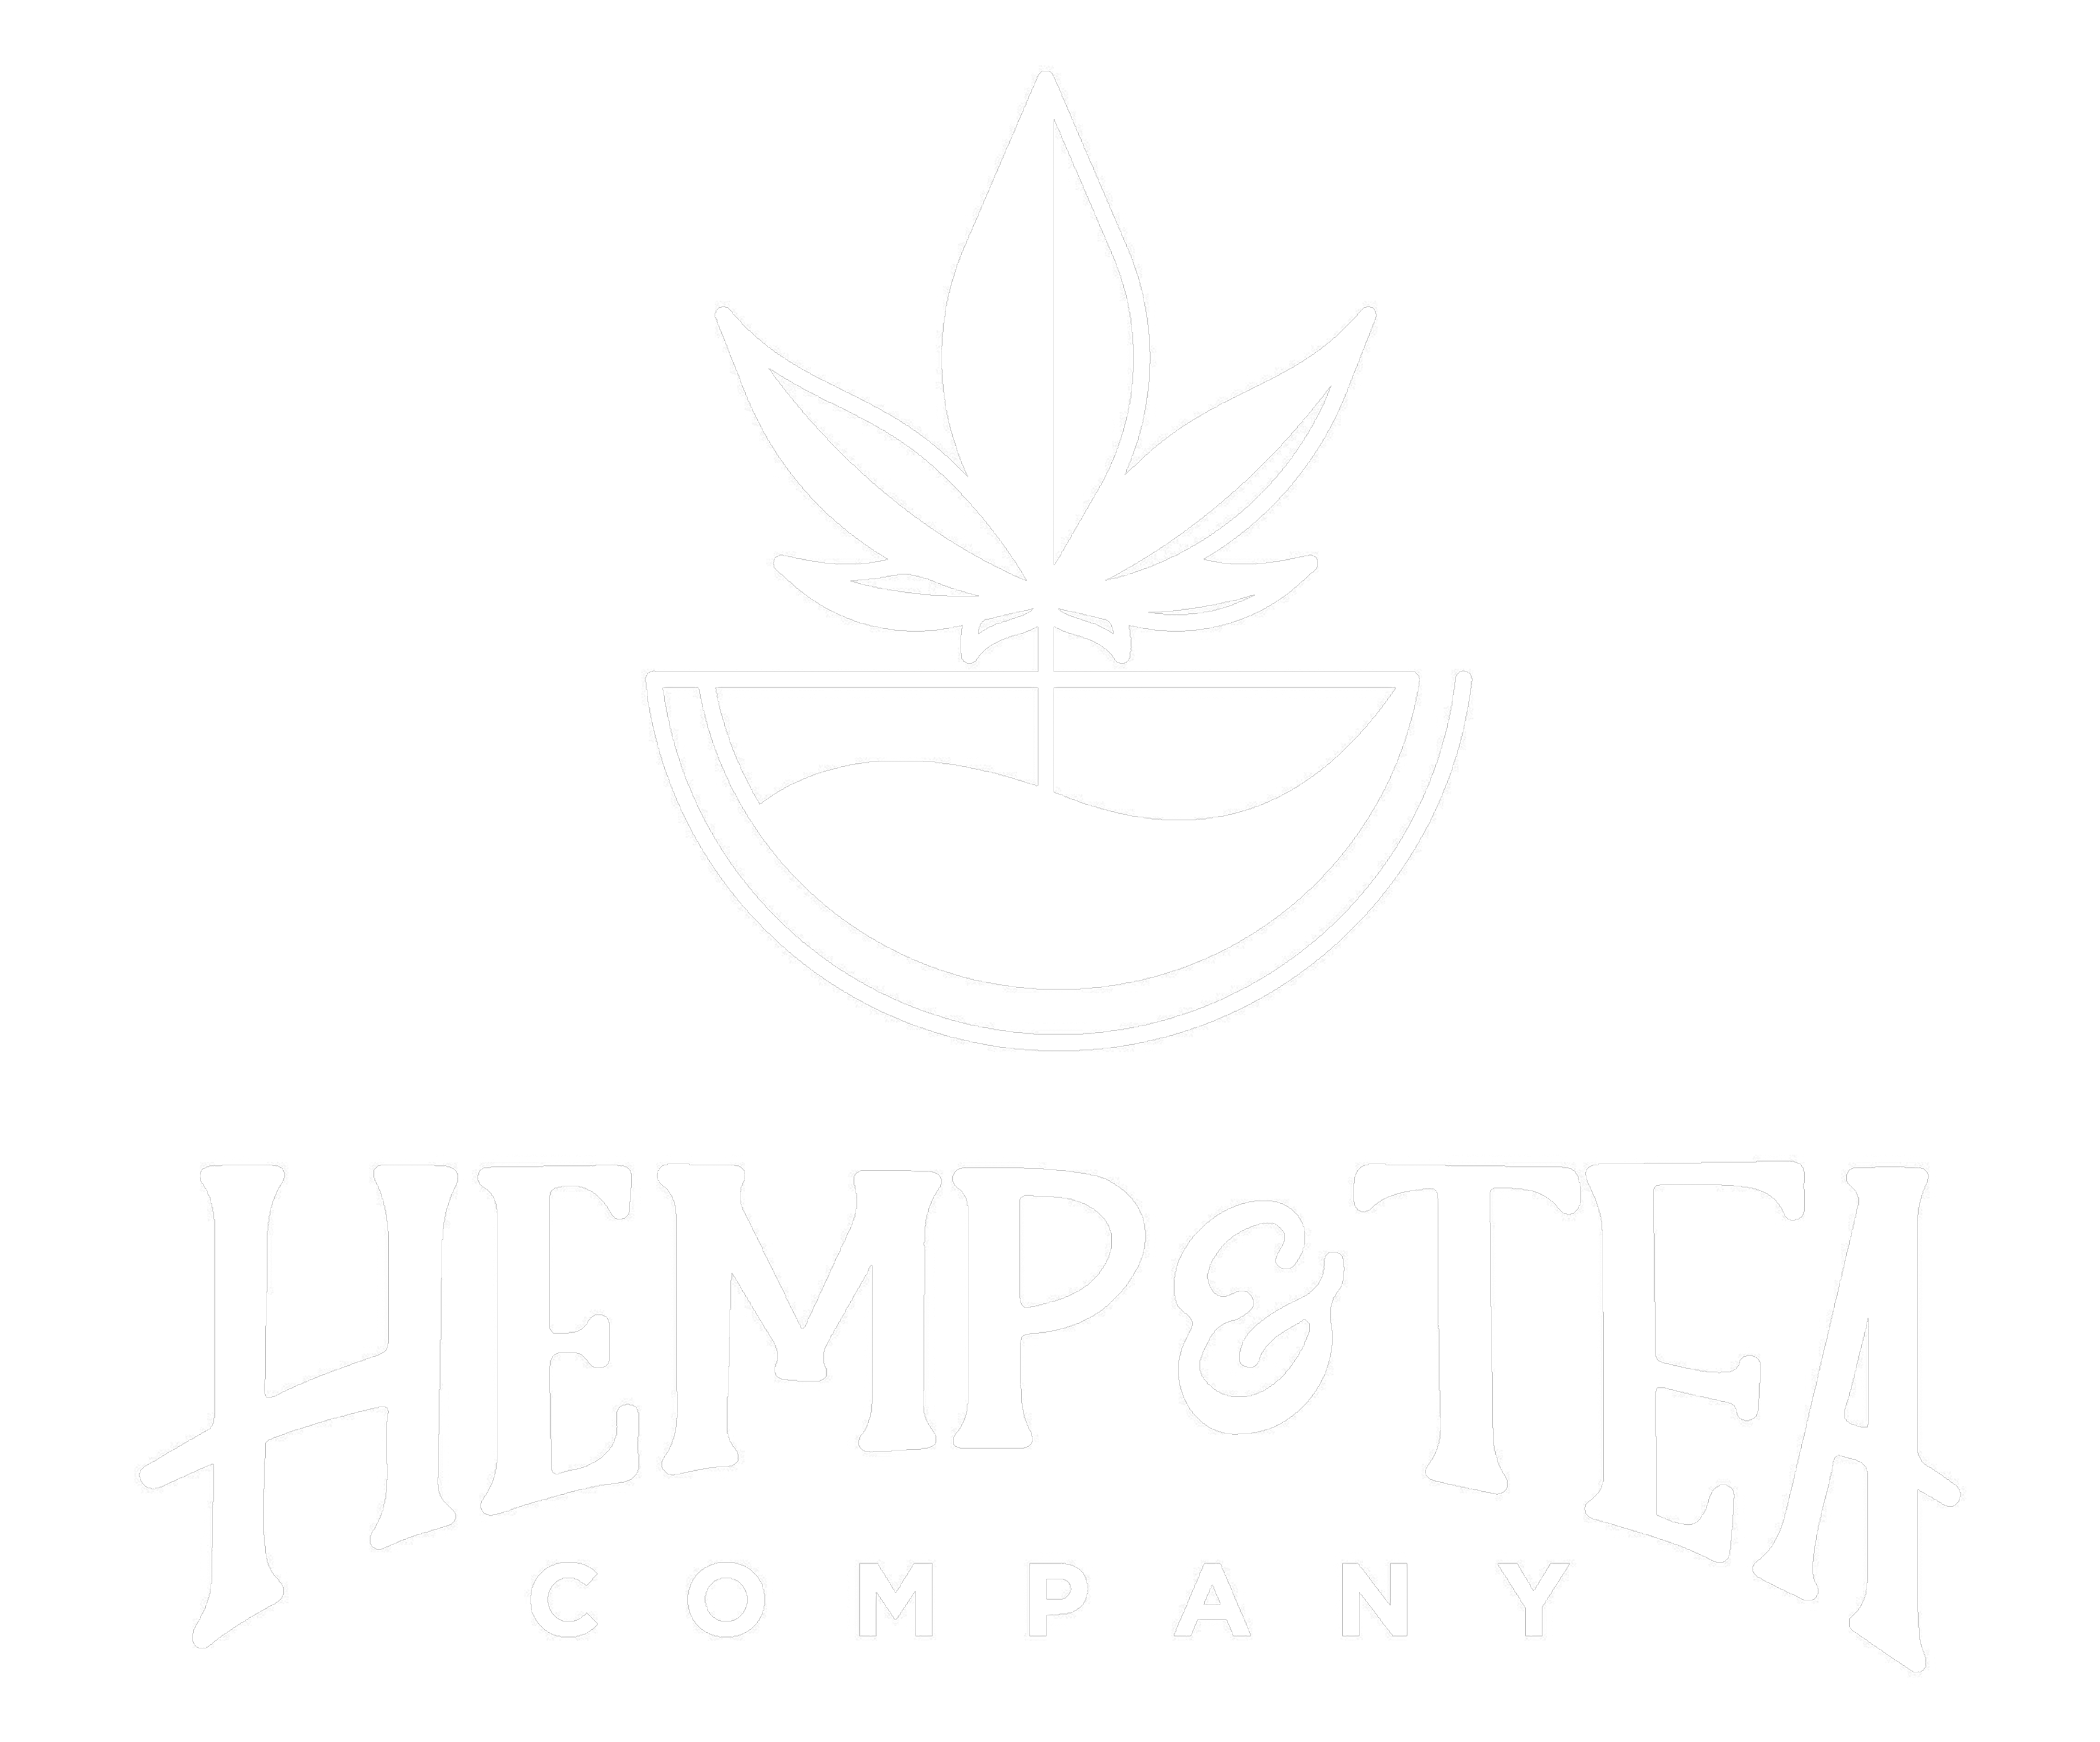 Hemp and Tea Company